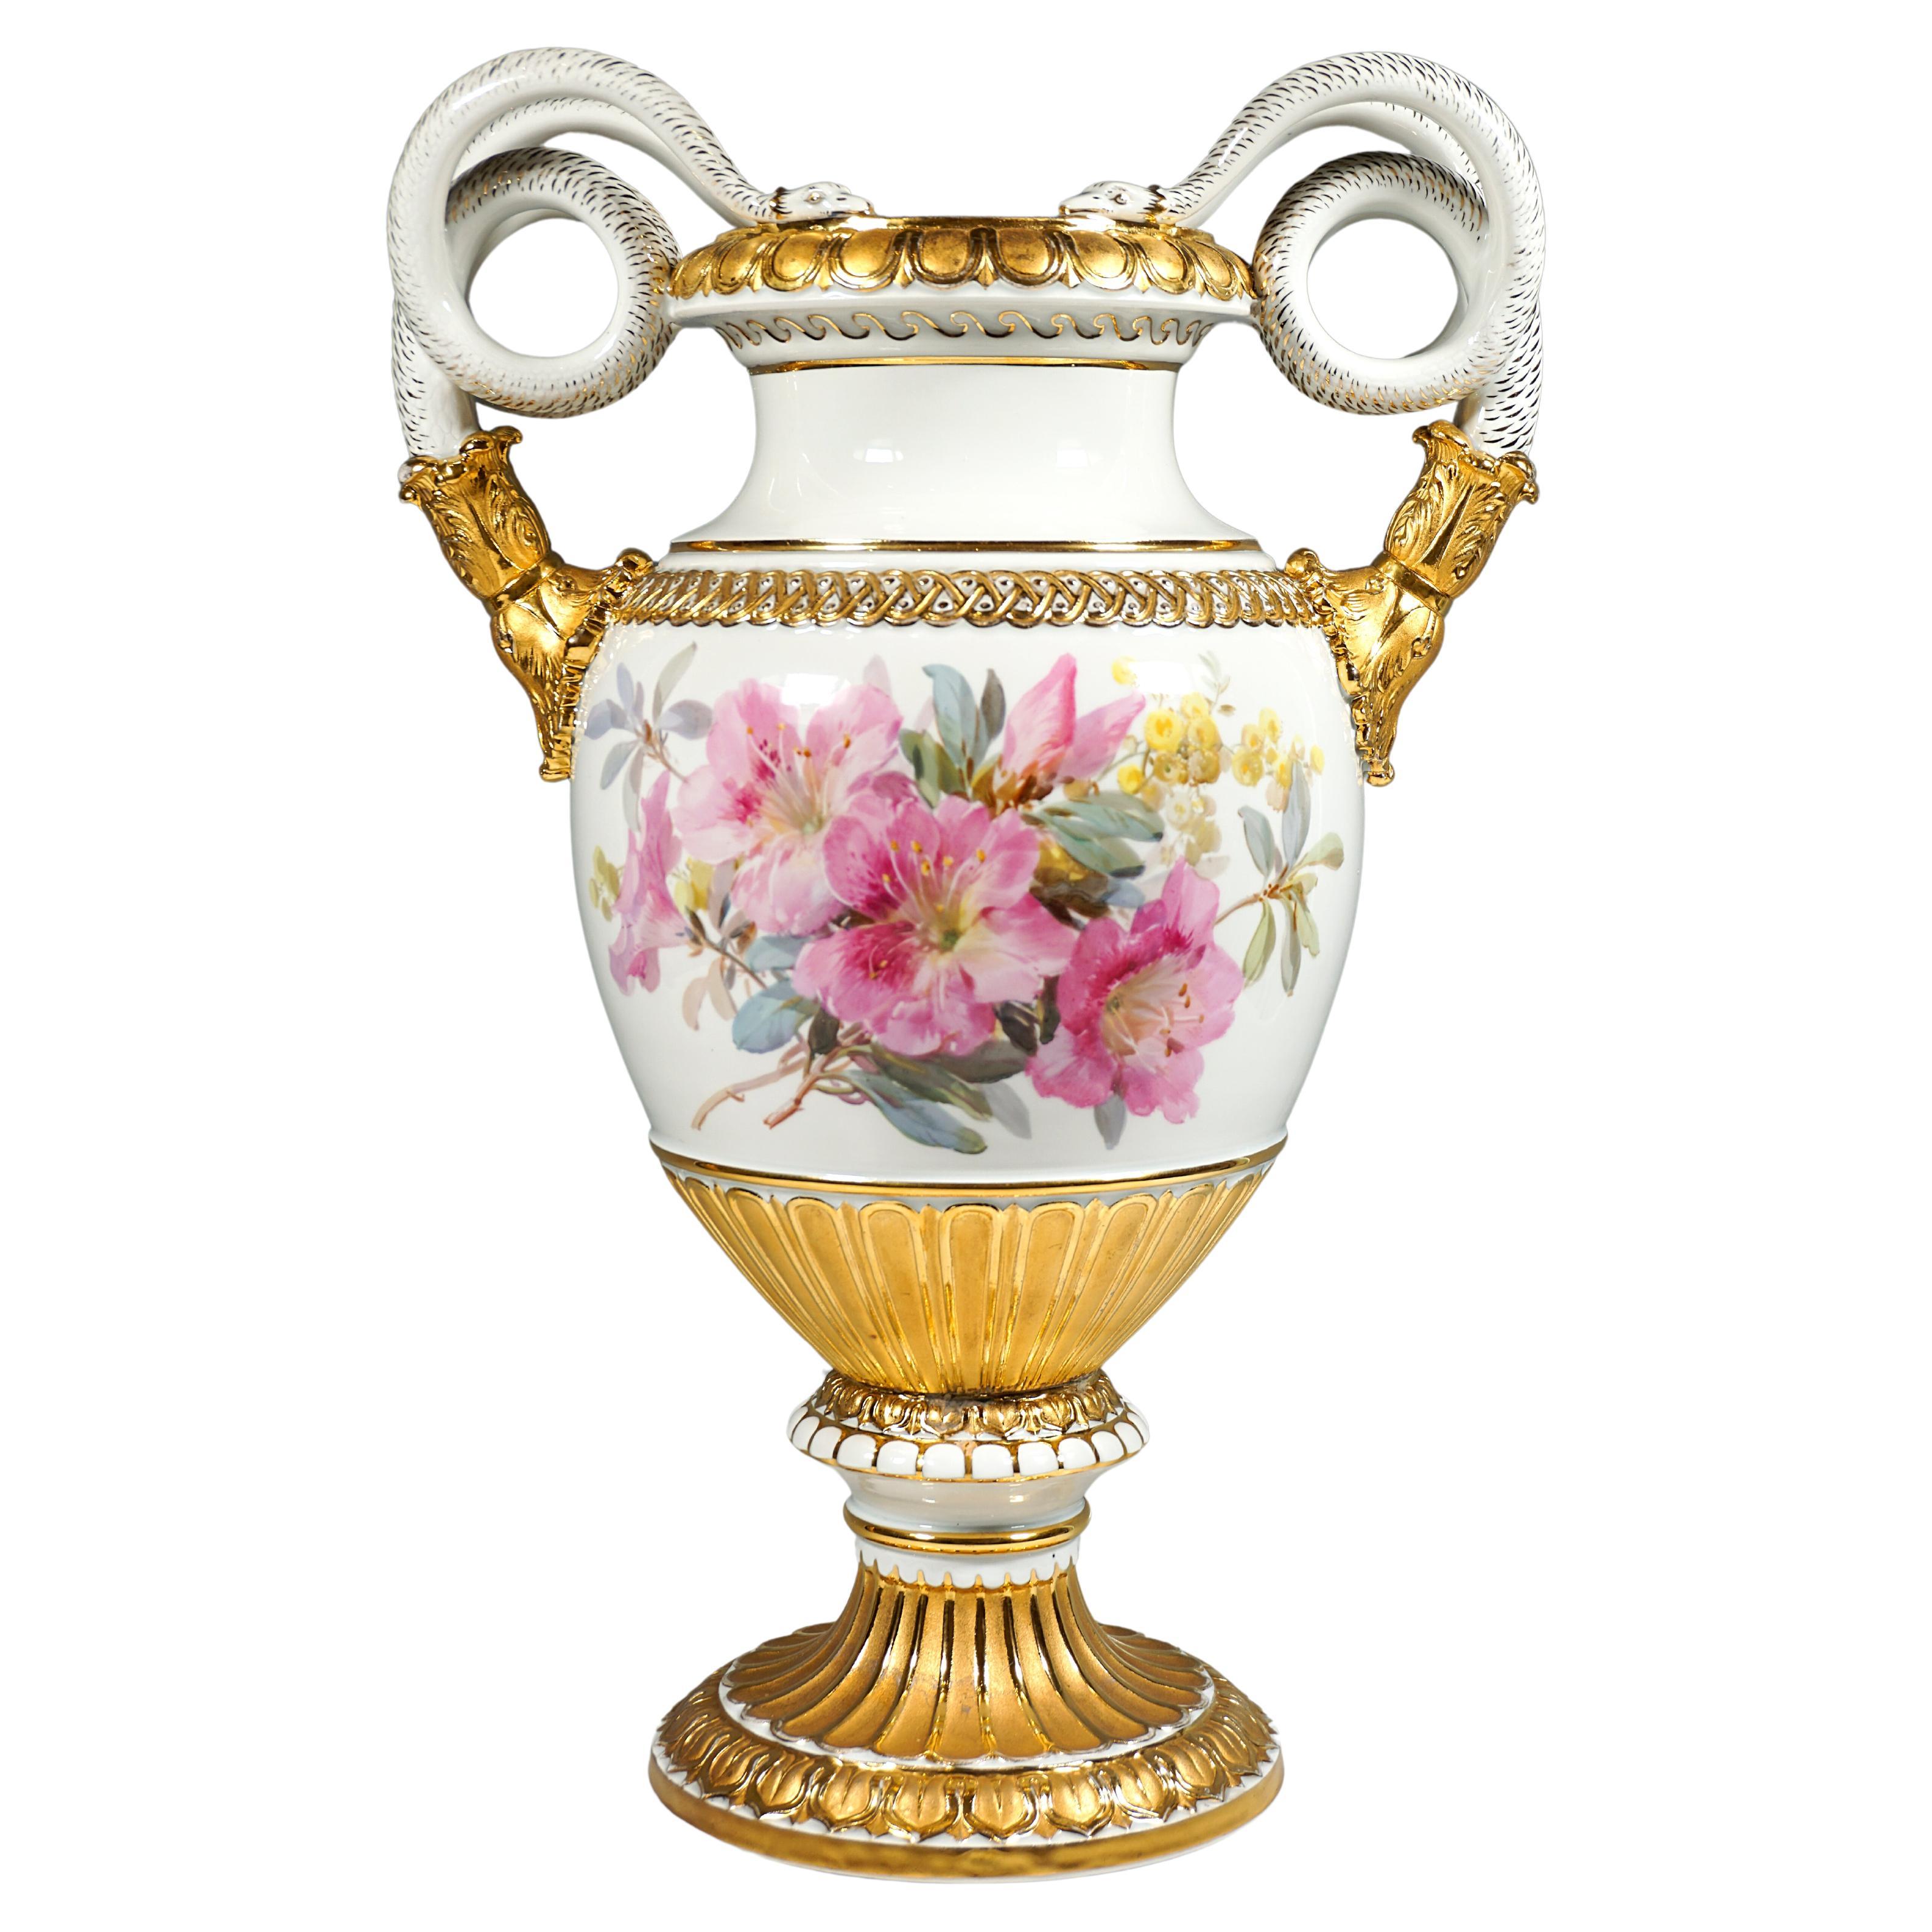 Meissen Snake Handle Vase With Soft Flower Painting, by Leuteritz, c 1865 H:48cm